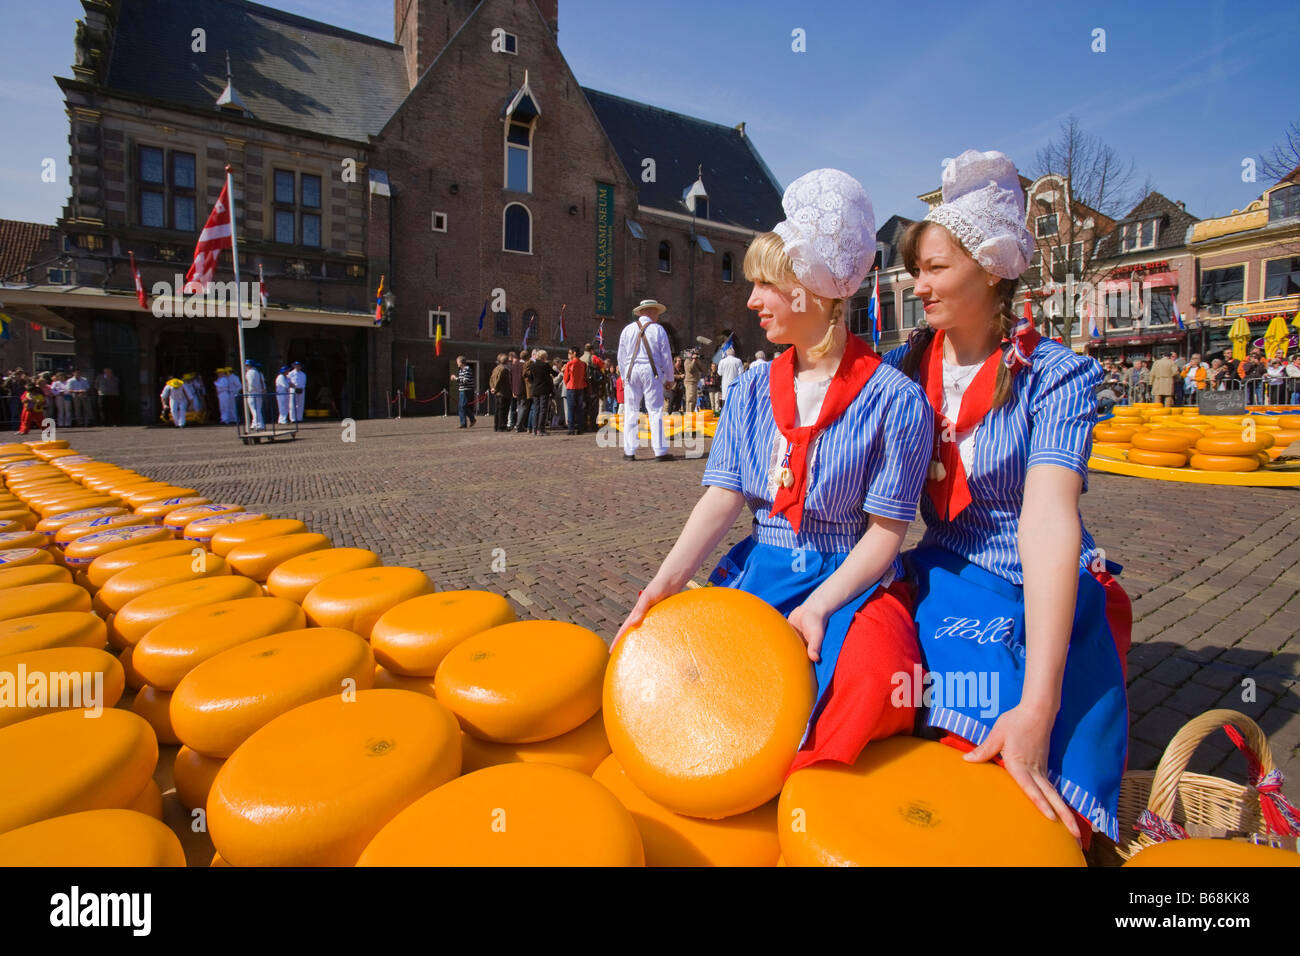 Cheese market, Alkmaar, The Netherlands Stock Photo